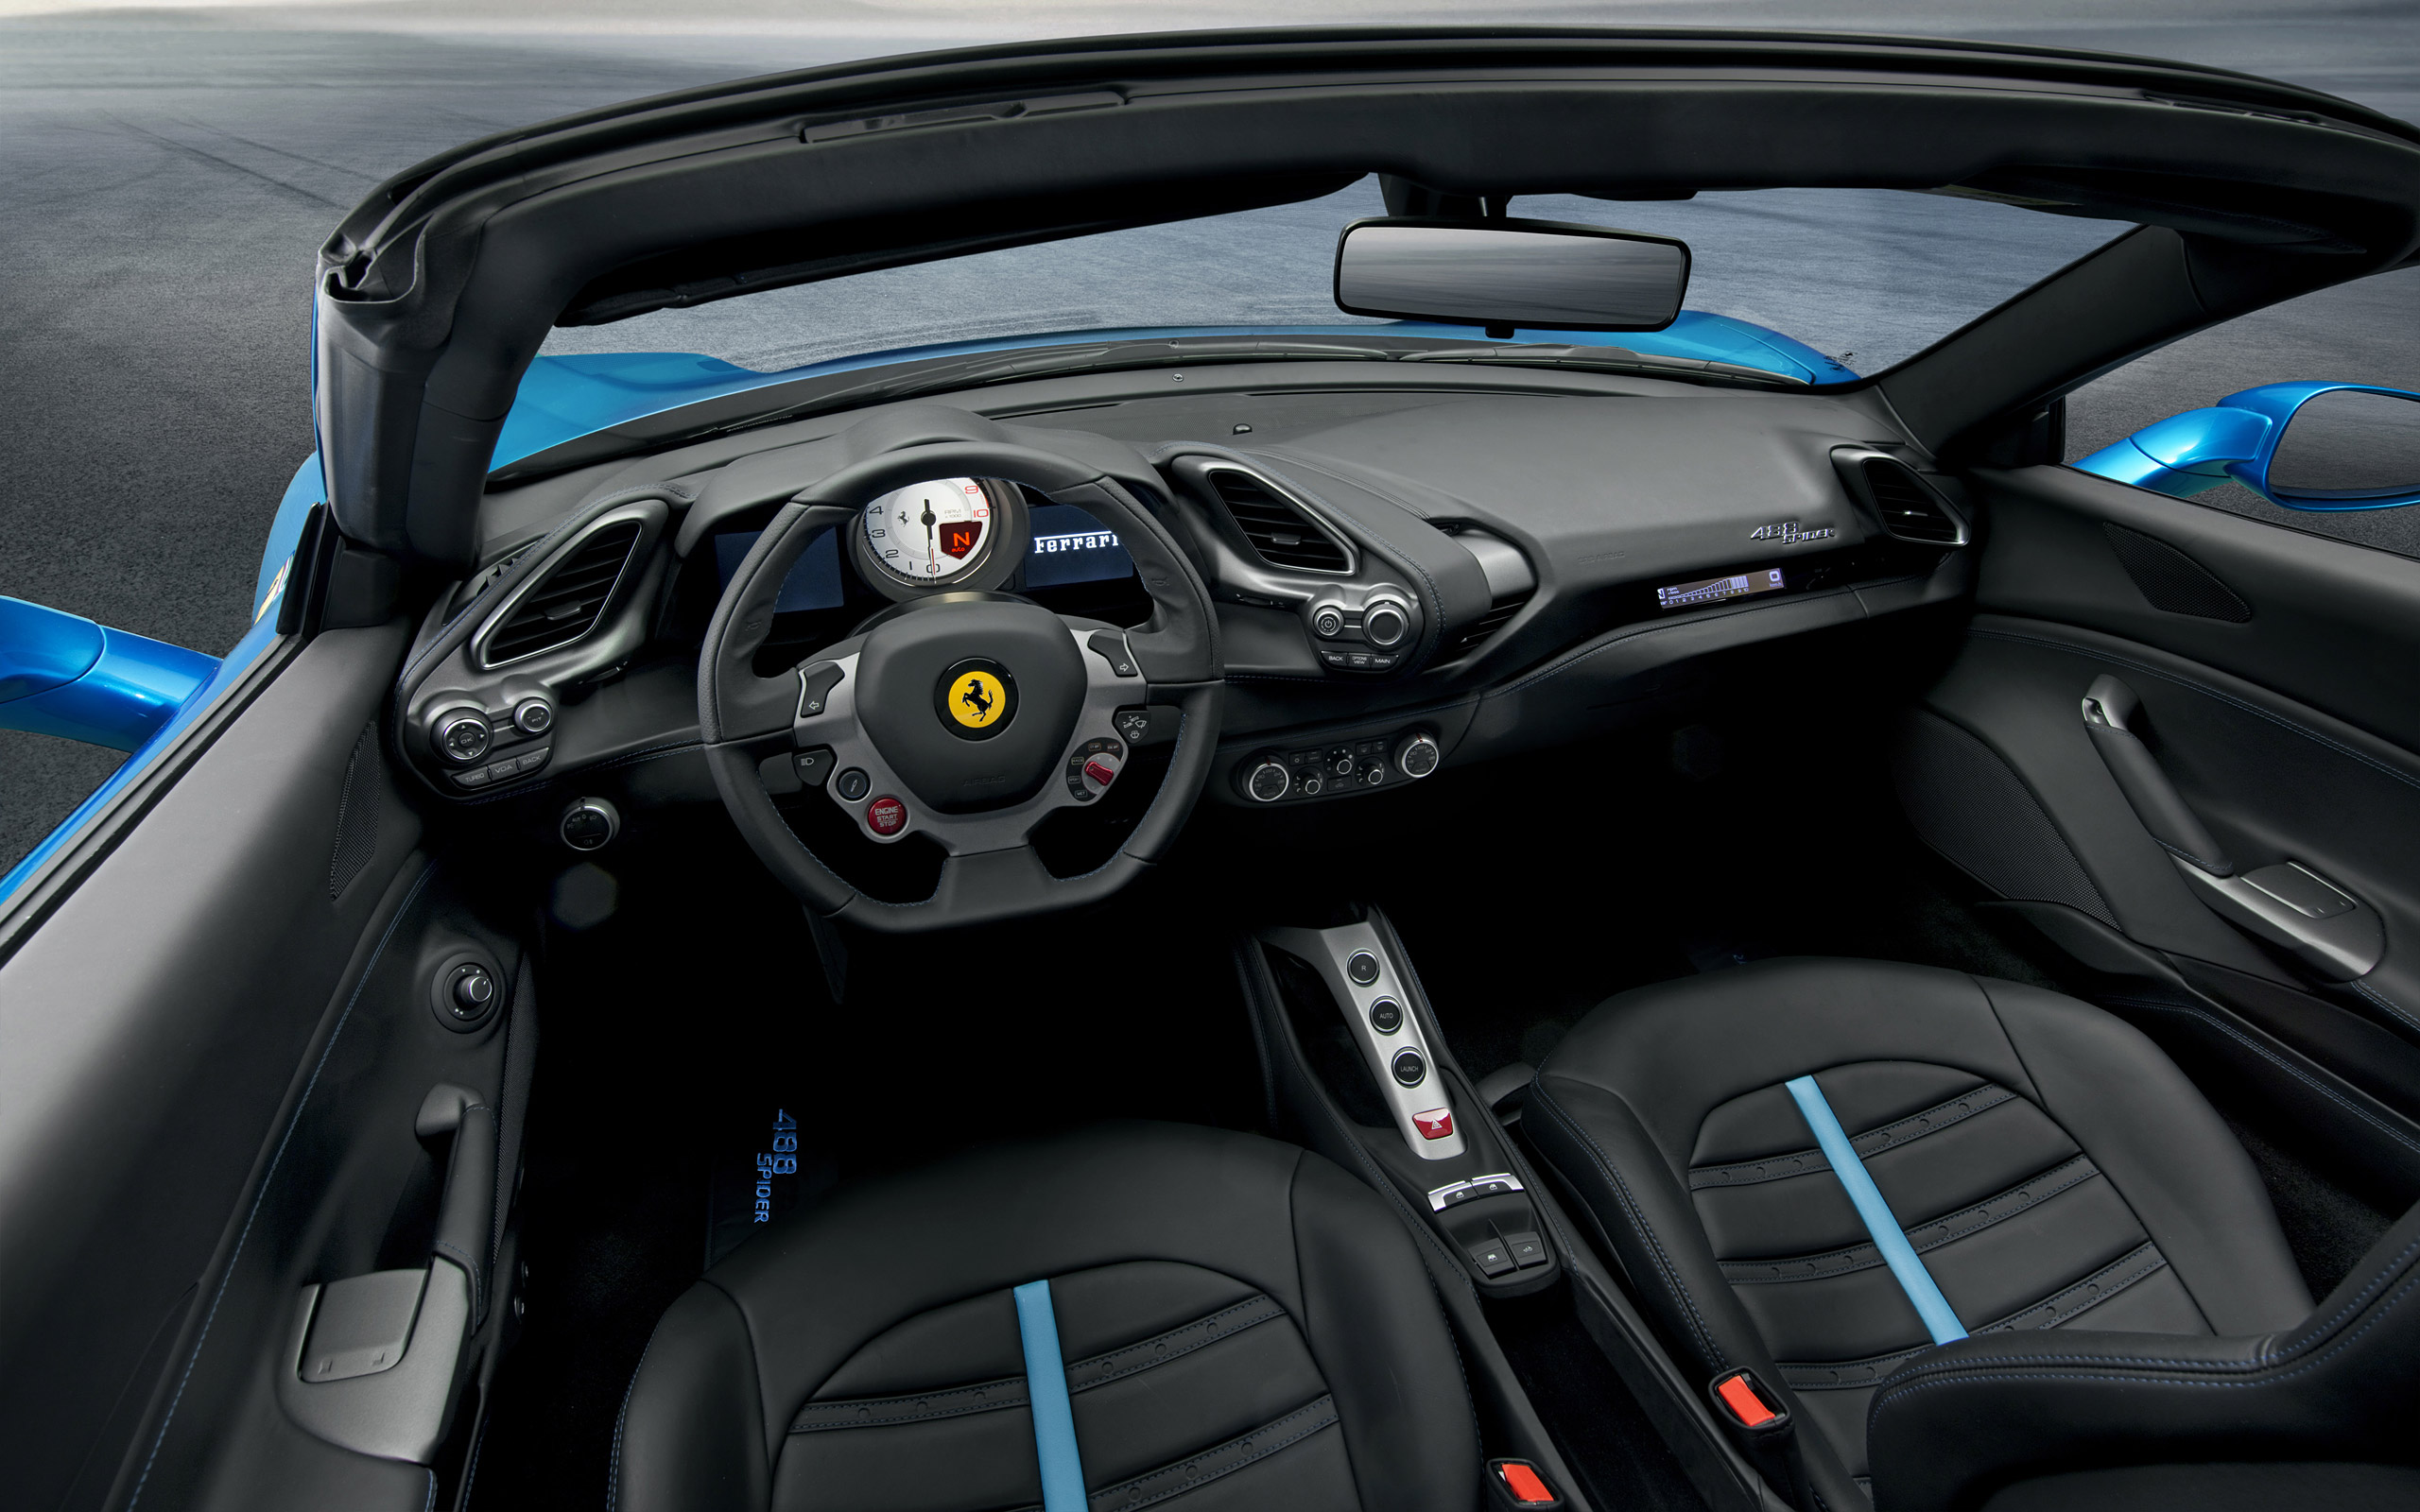  2016 Ferrari 488 Spider Wallpaper.